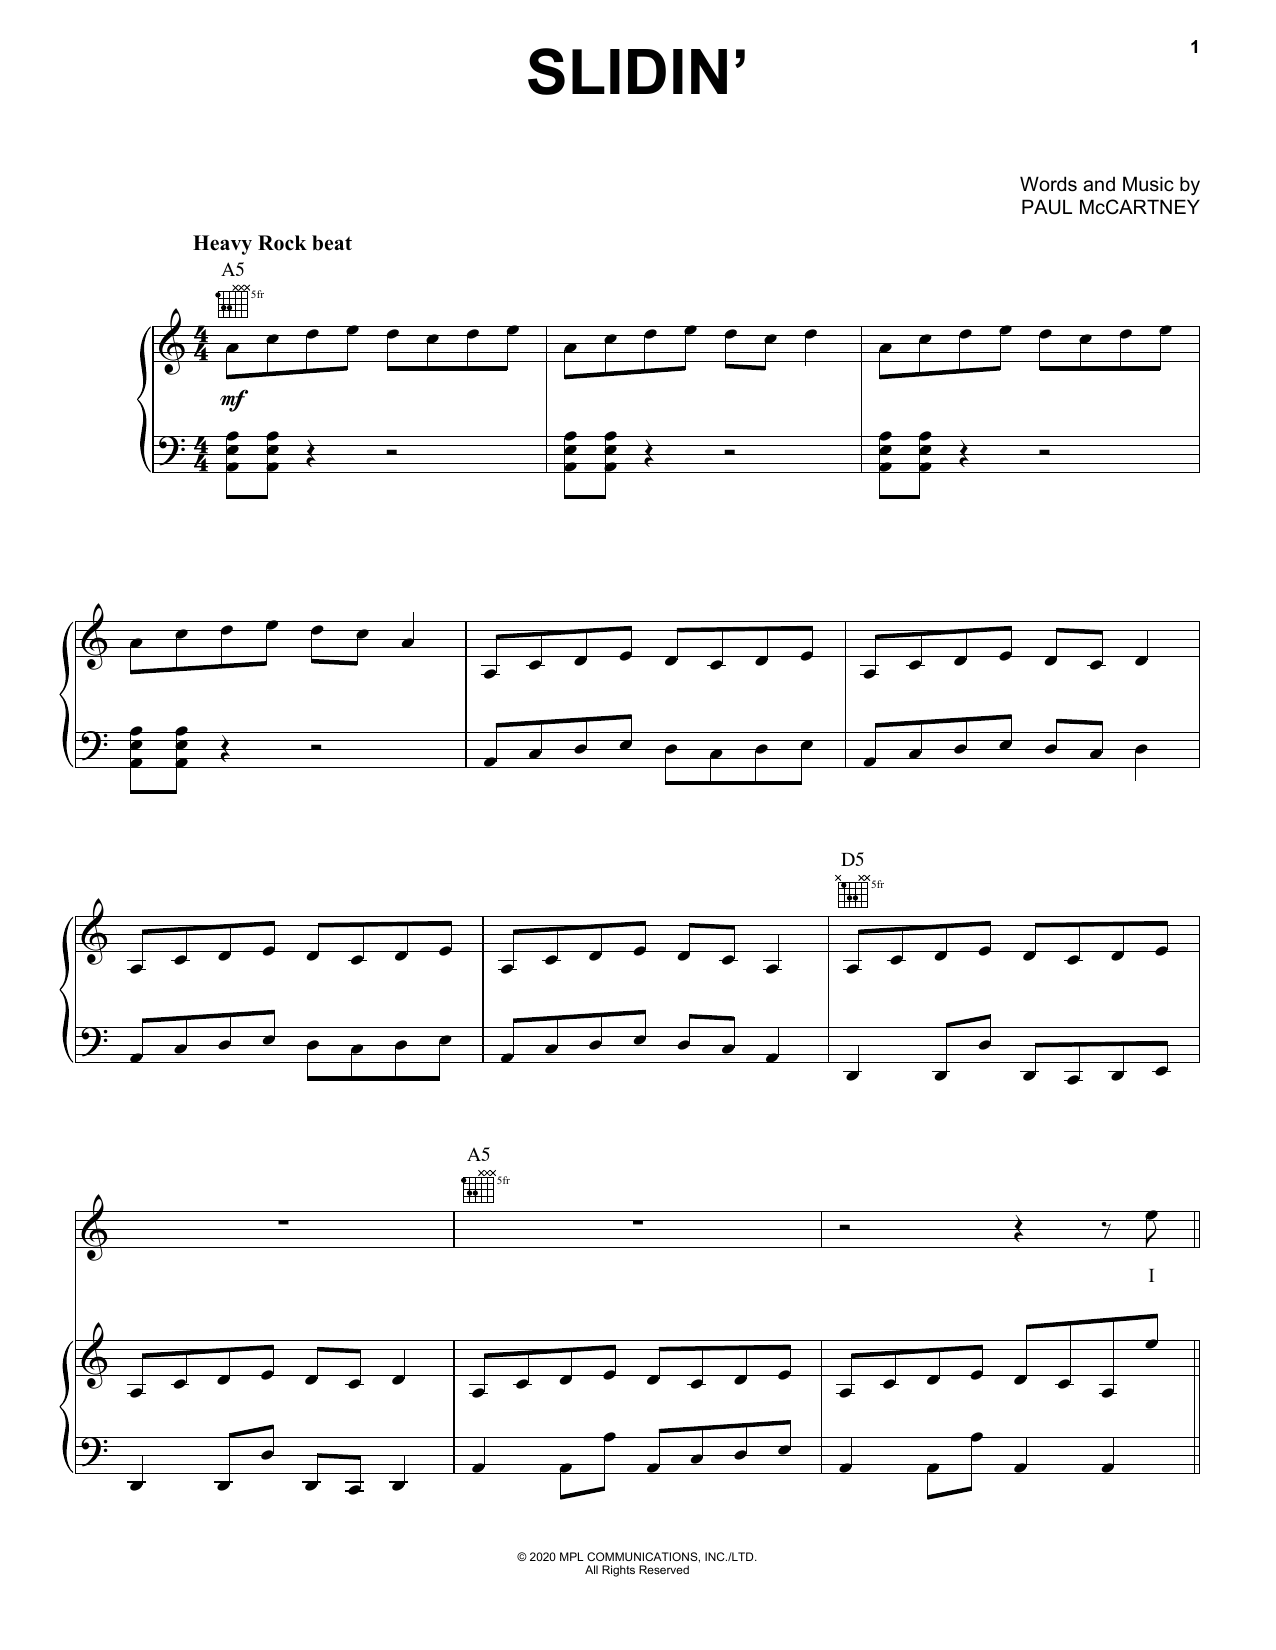 Paul McCartney Slidin' Sheet Music Notes & Chords for Lead Sheet / Fake Book - Download or Print PDF